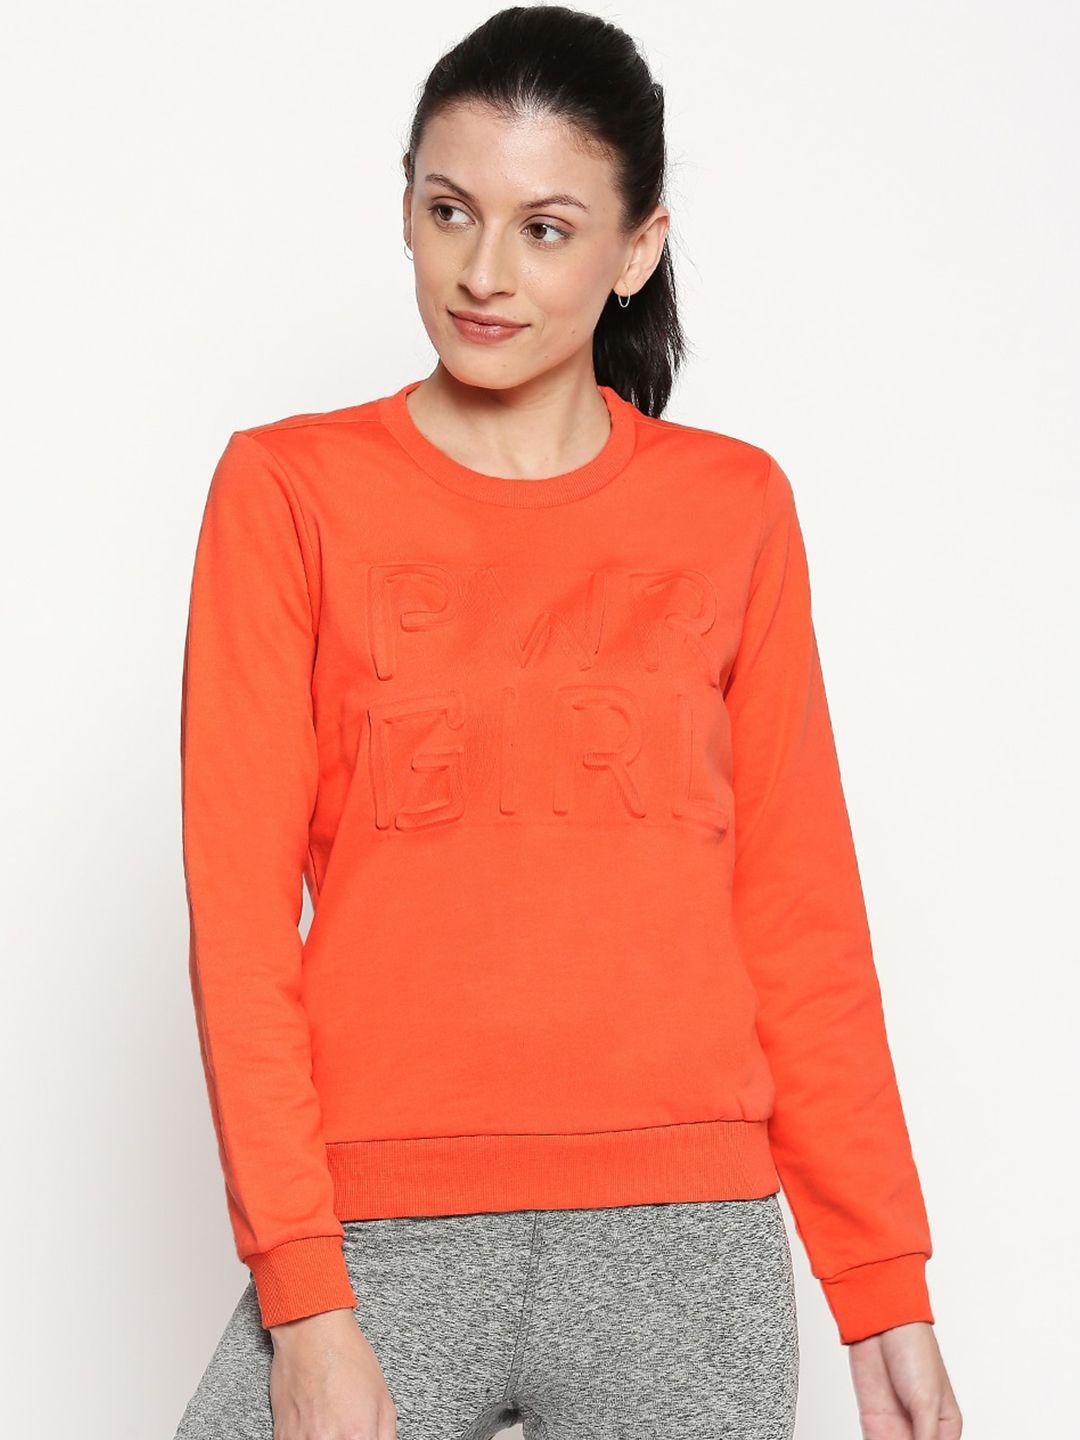 ajile by pantaloons women orange solid sweatshirt